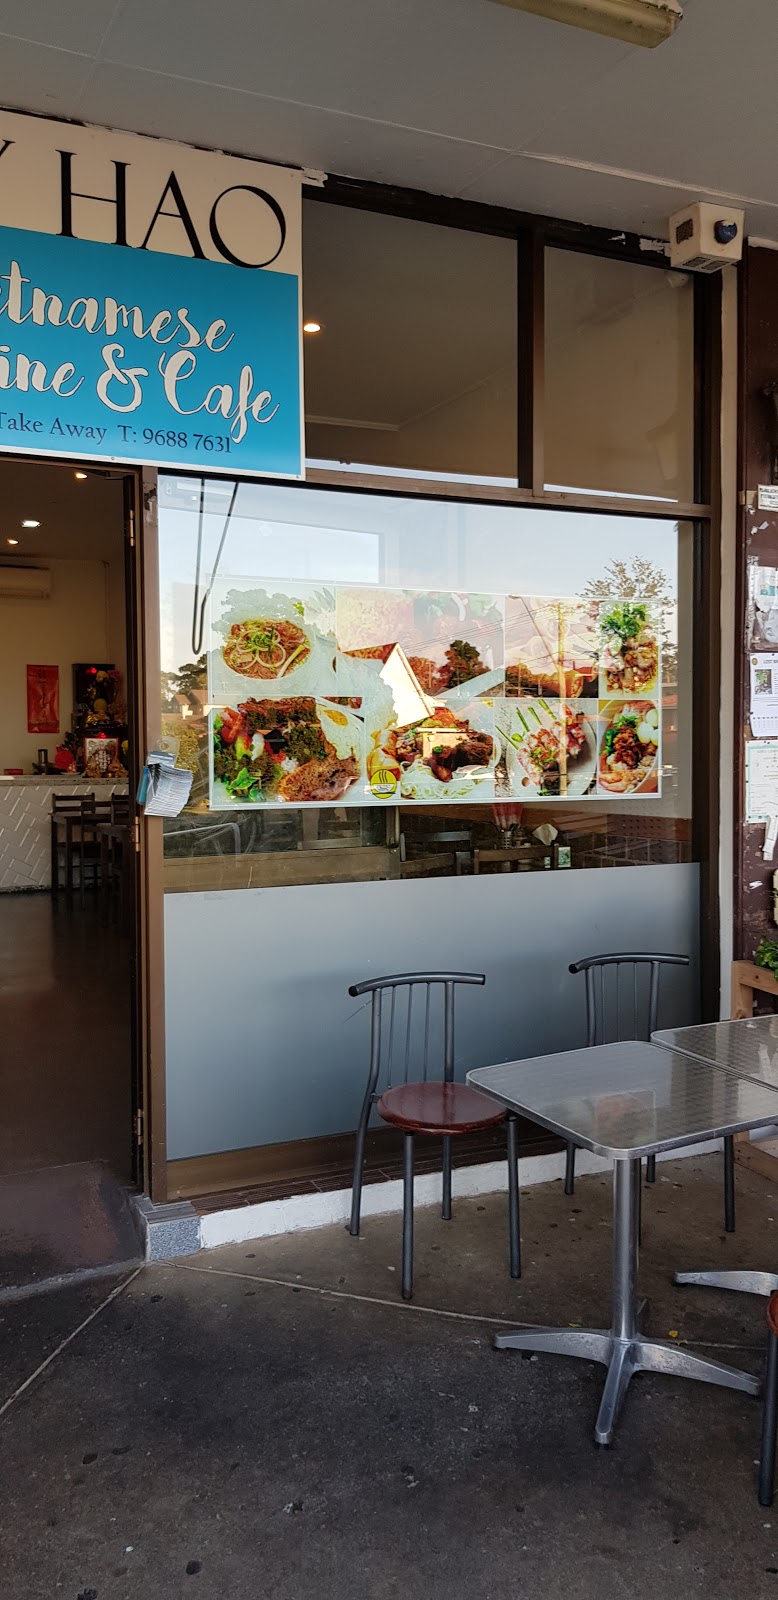 My Hao Cuisine - Vietnamese Restaurant and Cafe | restaurant | Shop 4 Chisholm Centre, Churchill Dr, Winston Hills NSW 2153, Australia | 0296887631 OR +61 2 9688 7631